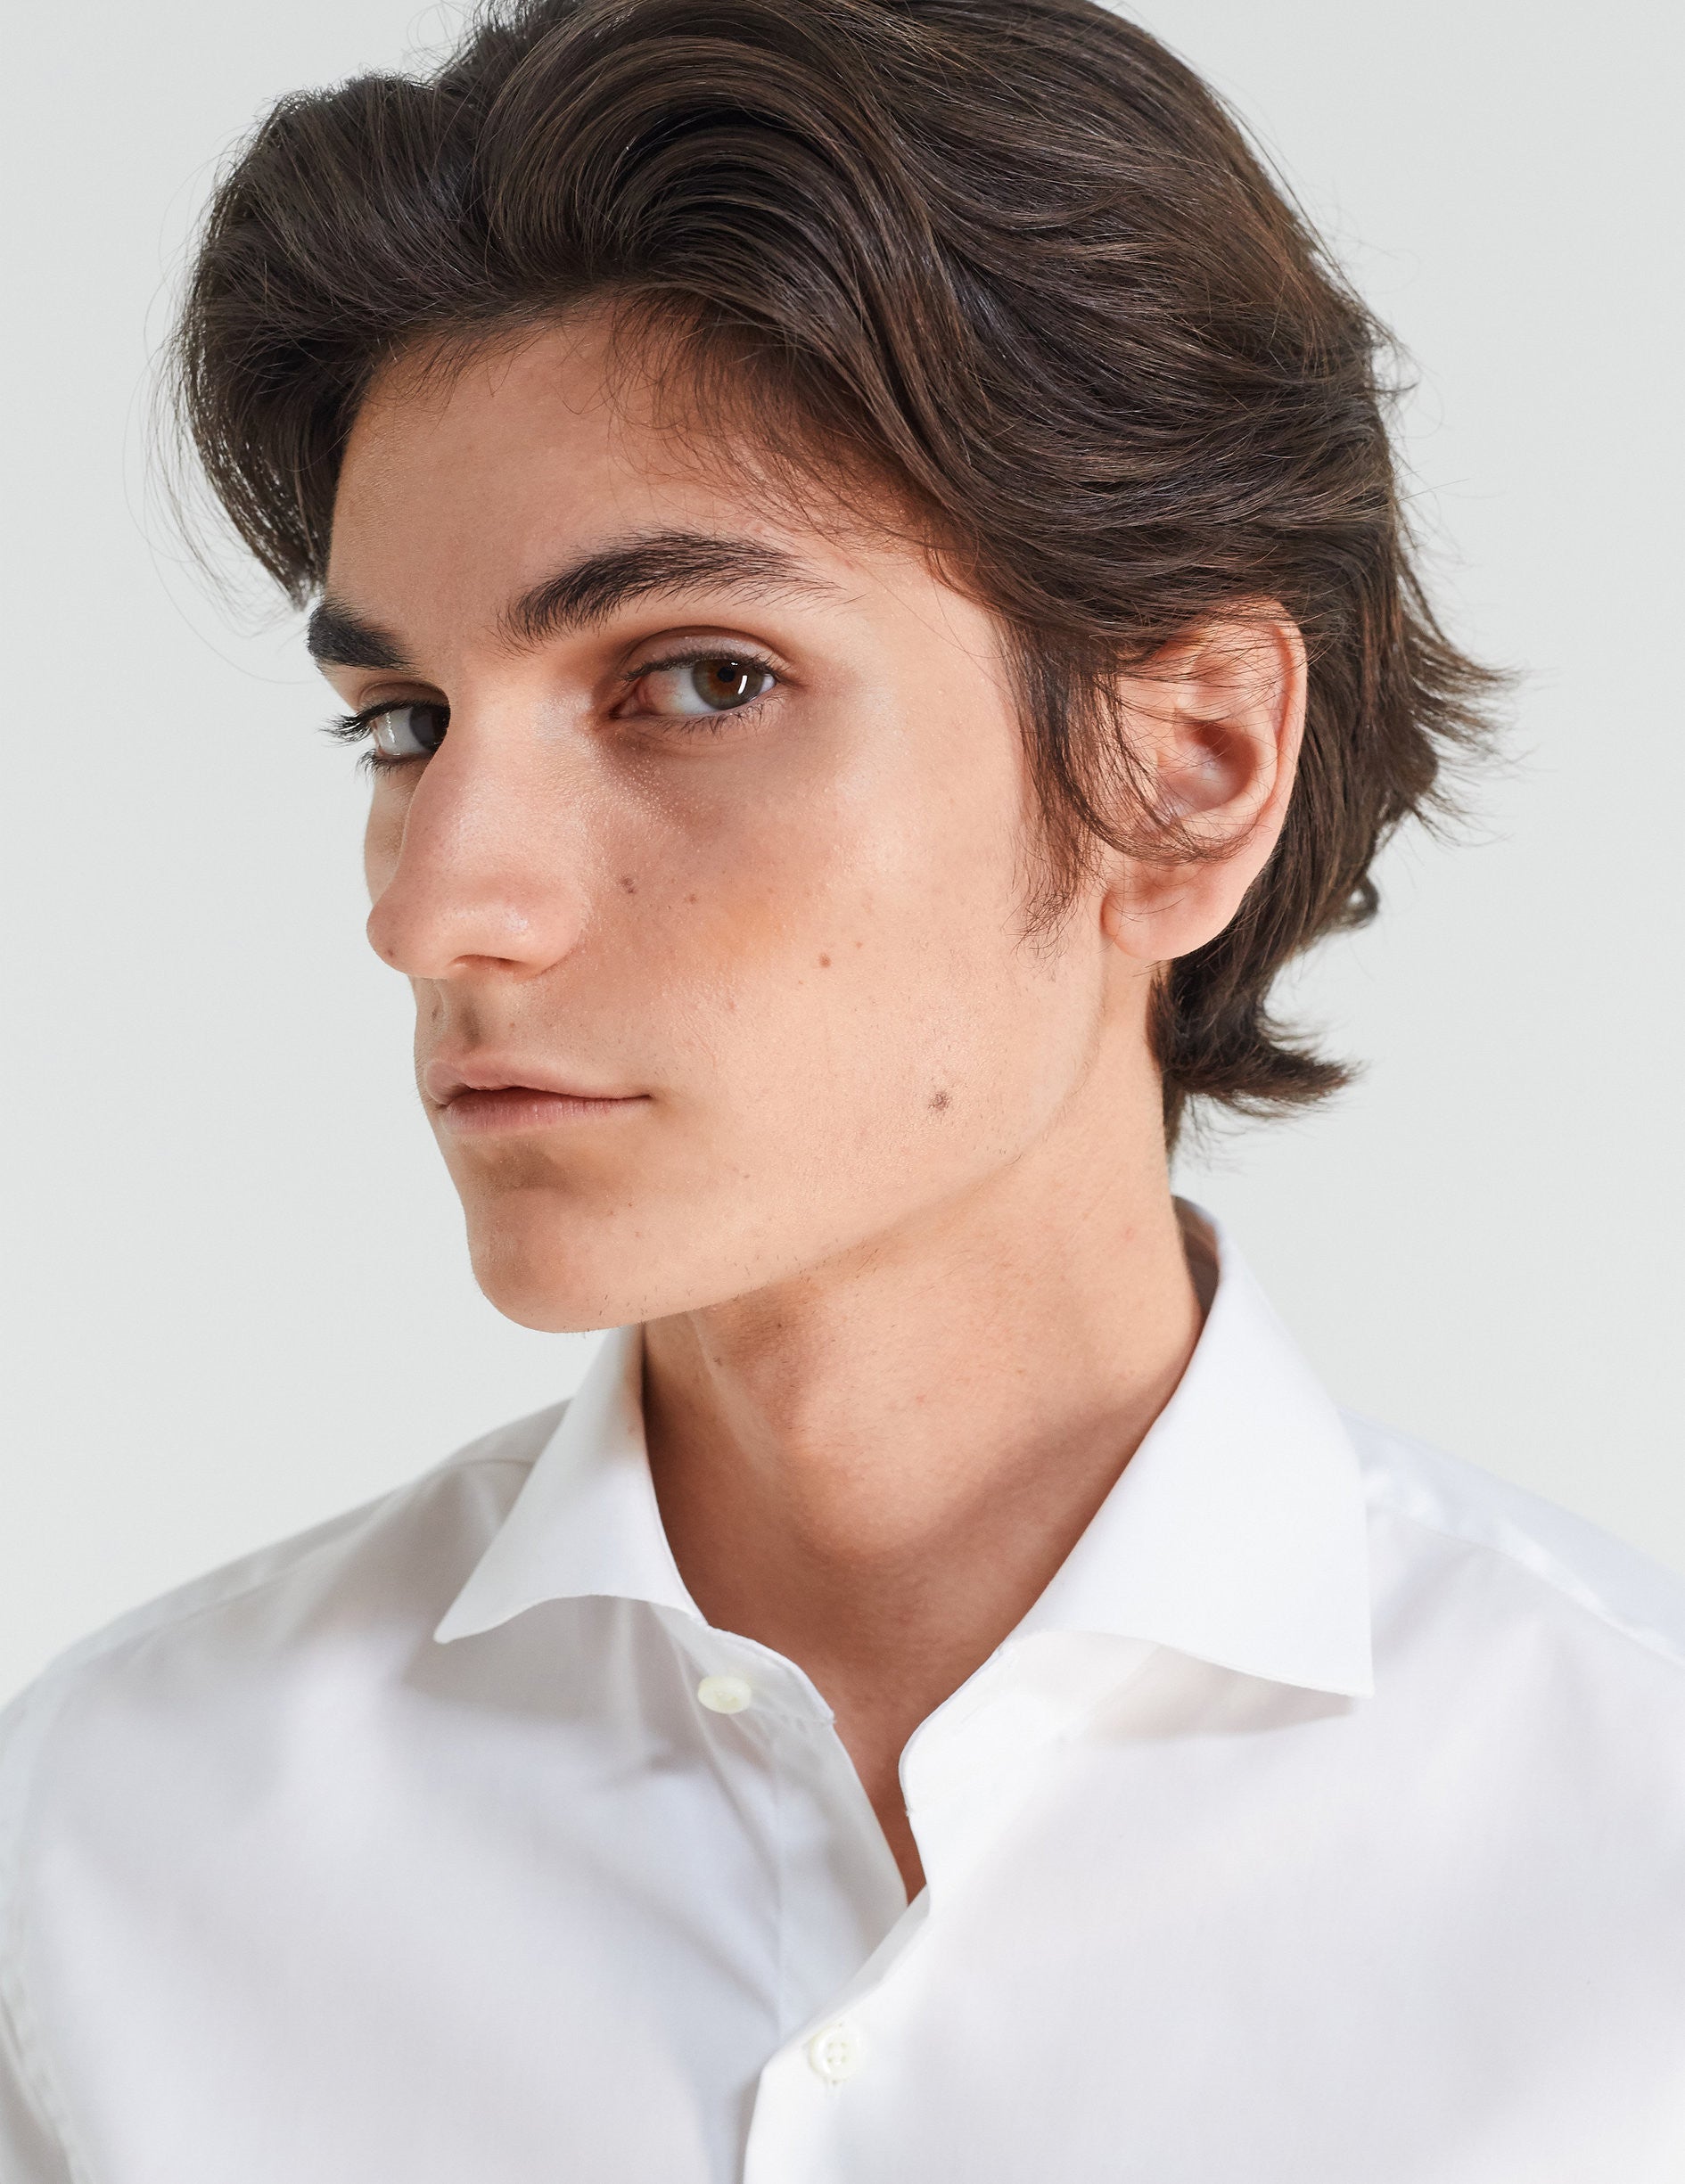 Fitted white wrinkle-free shirt - Poplin - Italian Collar